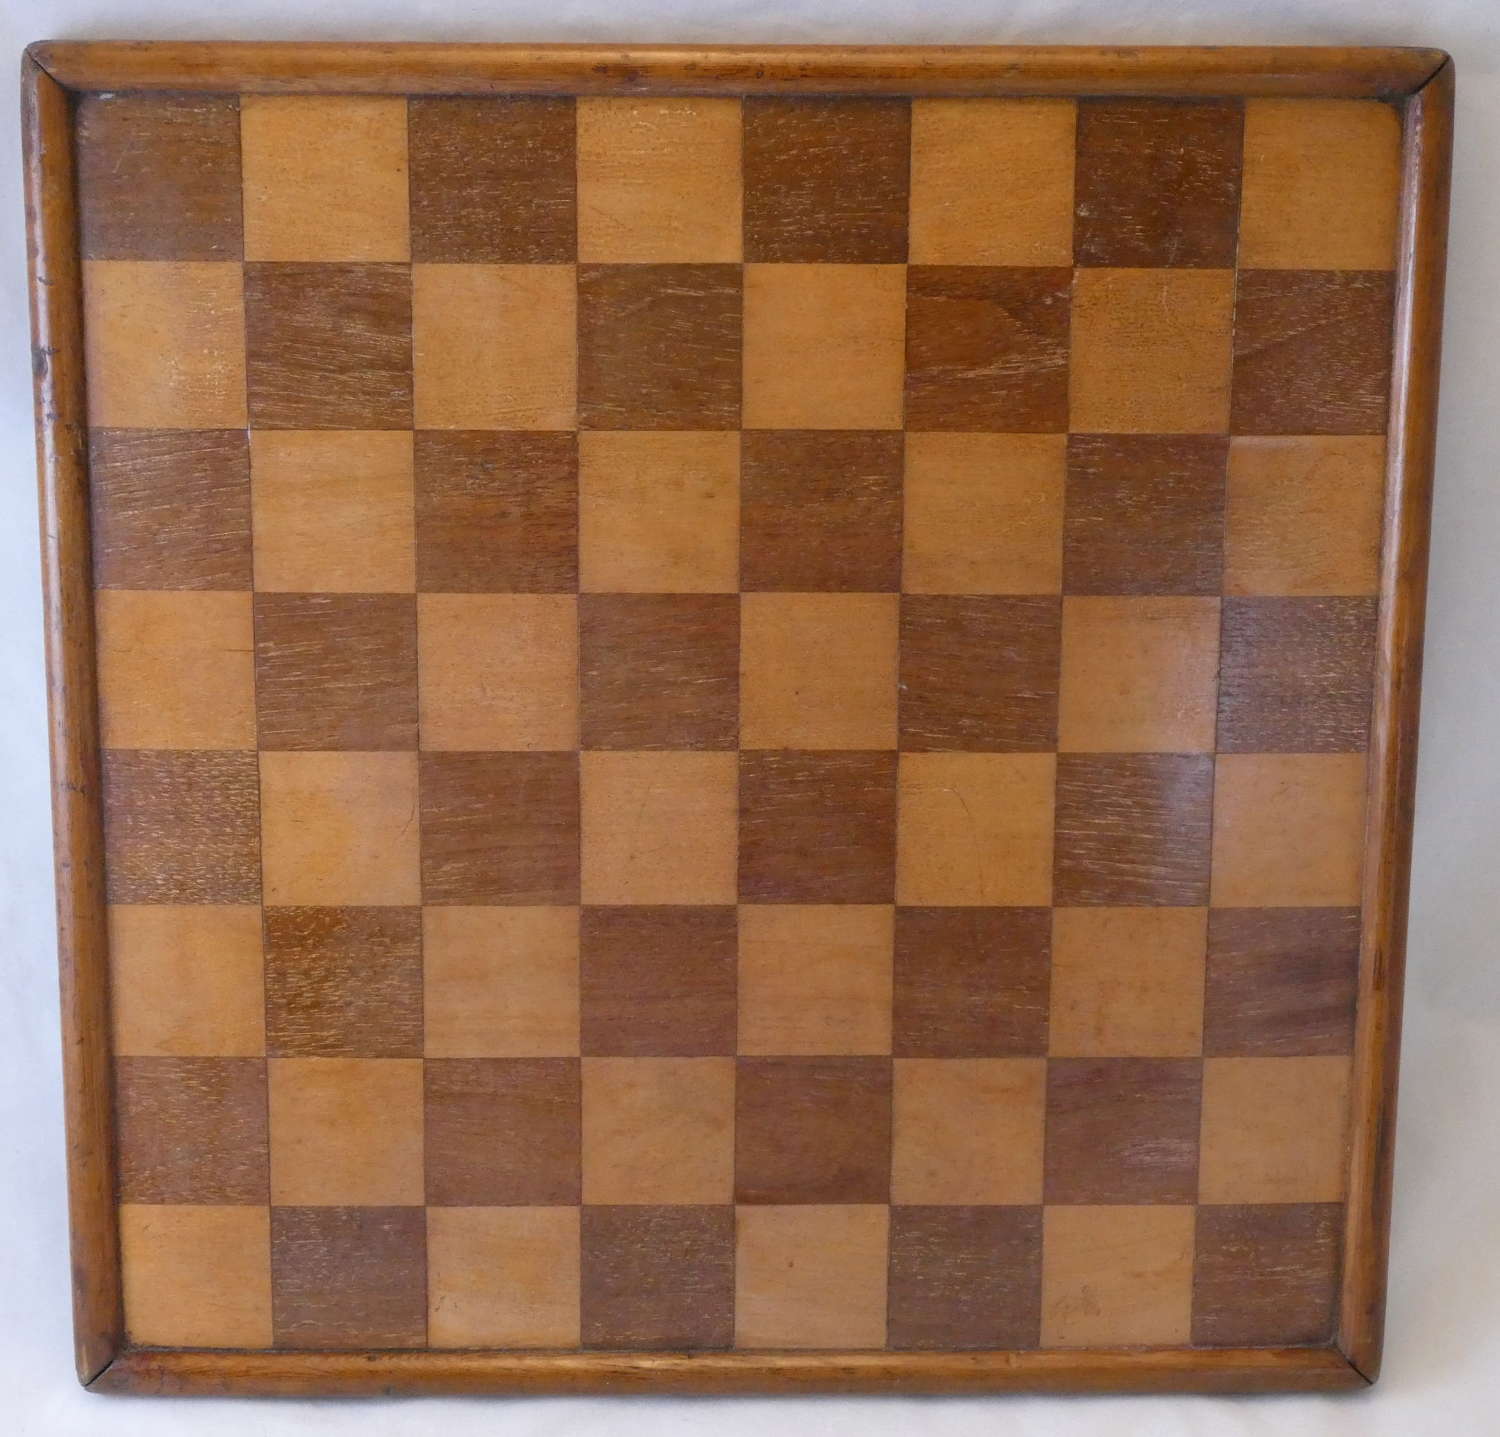 Chessboard, circa 1900